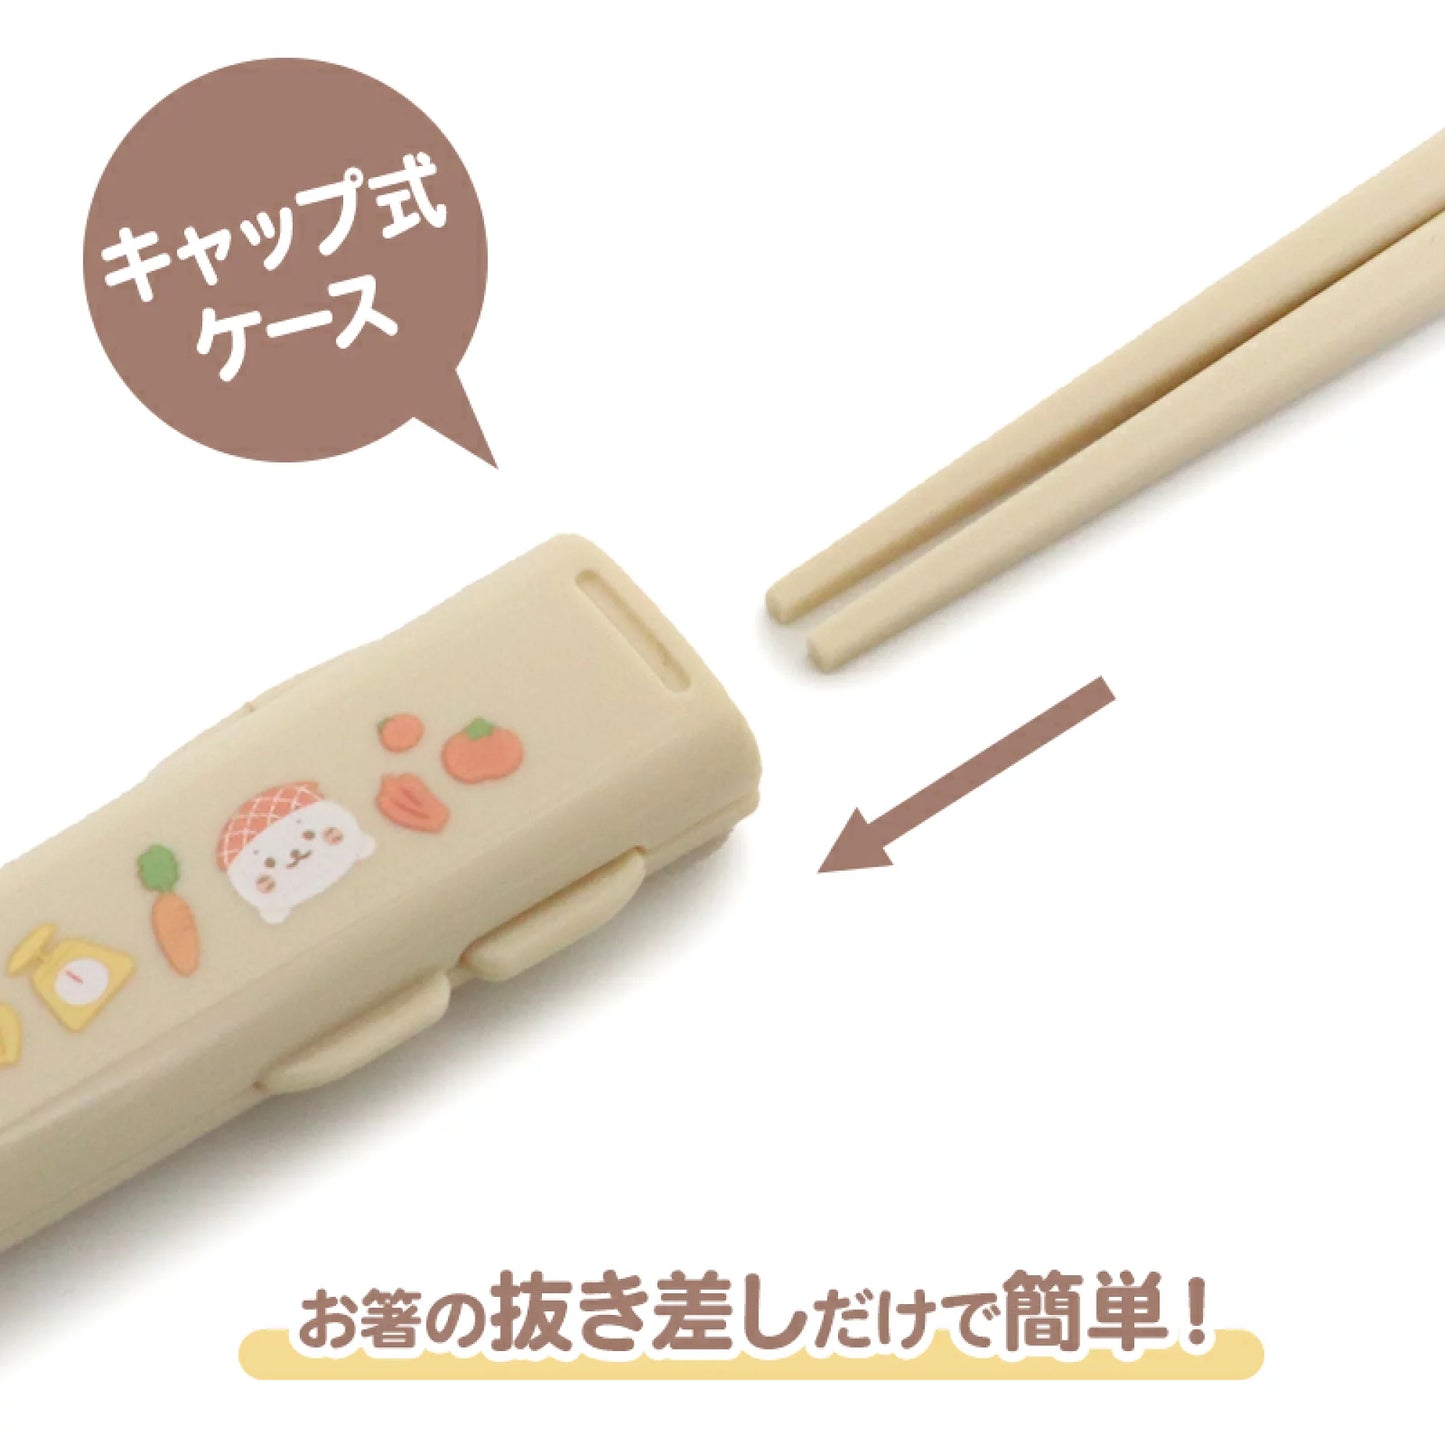 Sirotan日本製筷子連盒